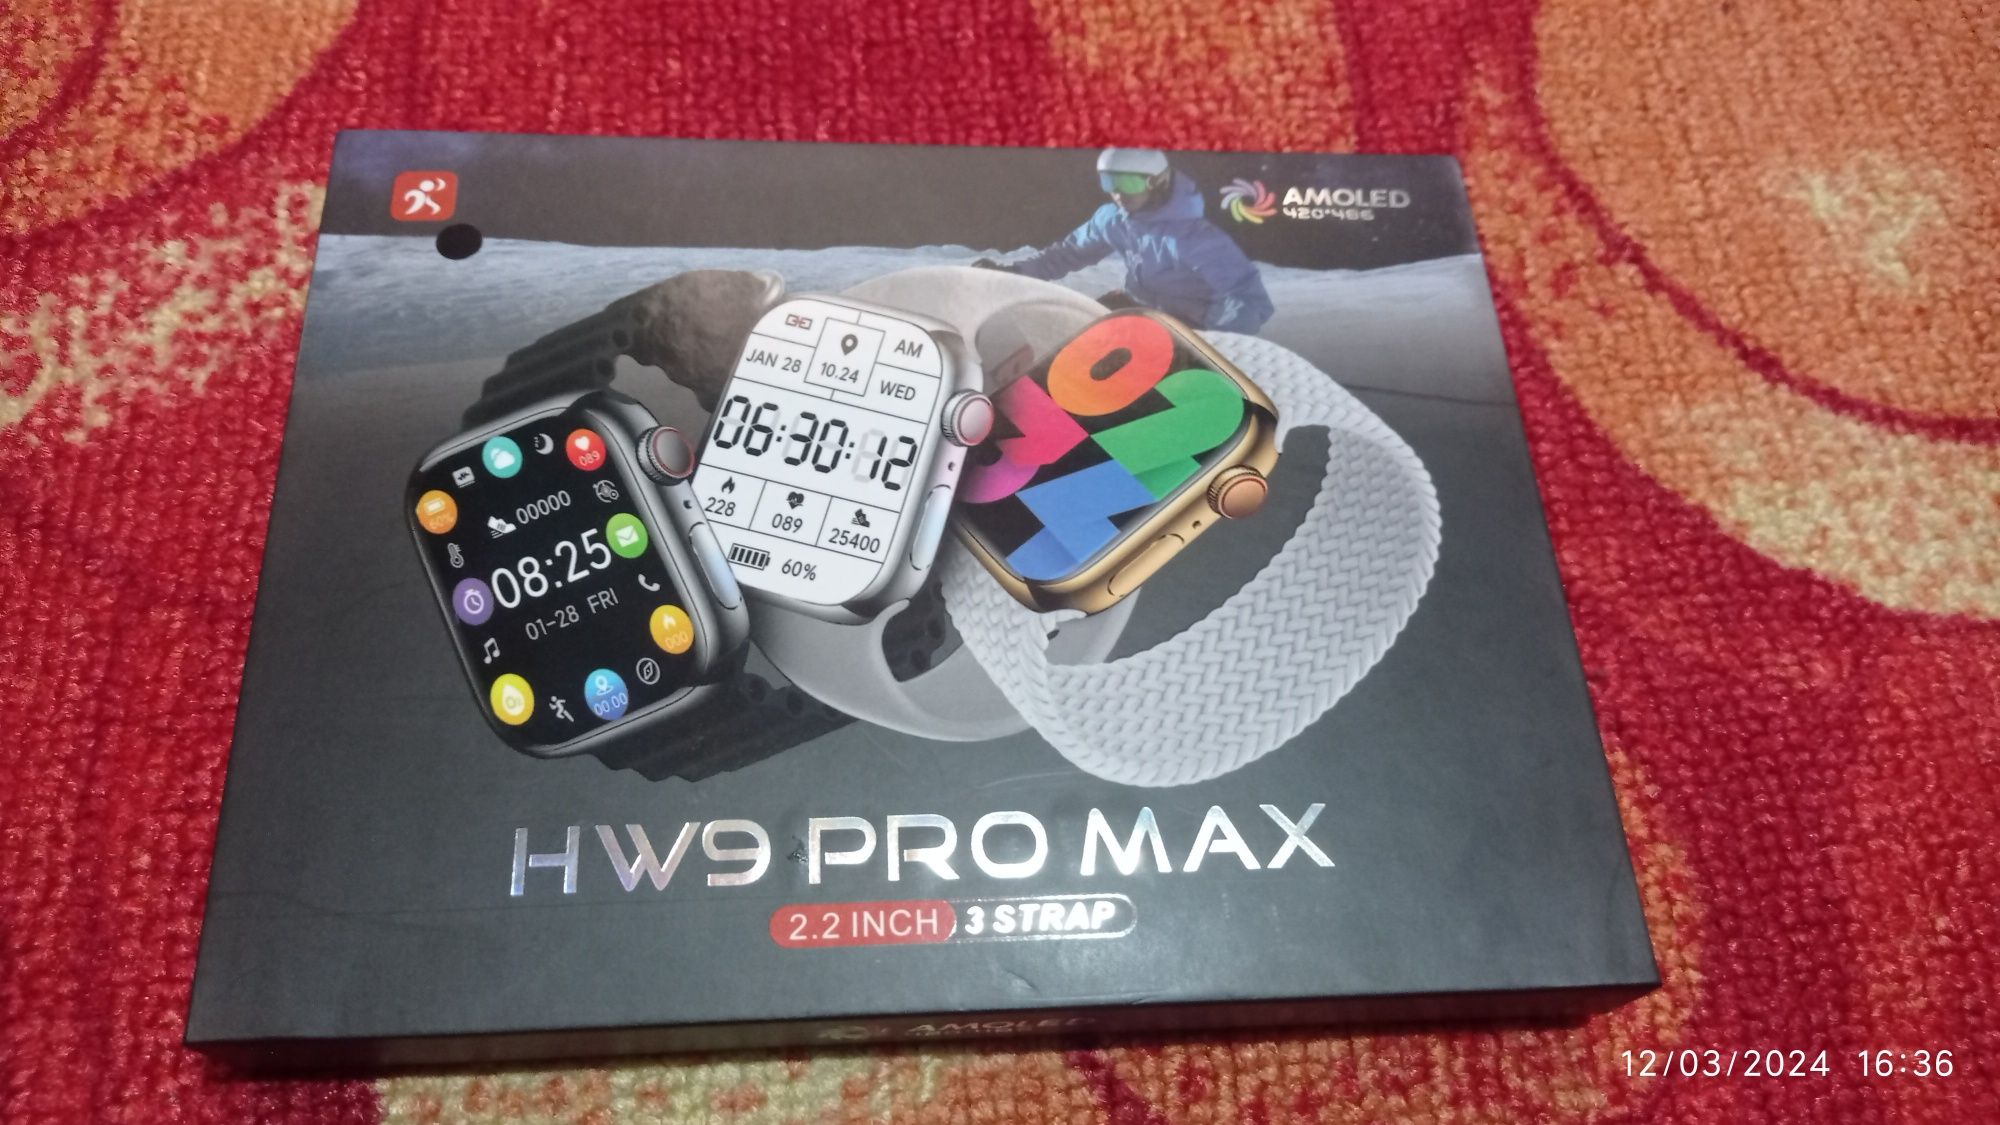 Iwatch HW9 Pro Max Oxirgi Model